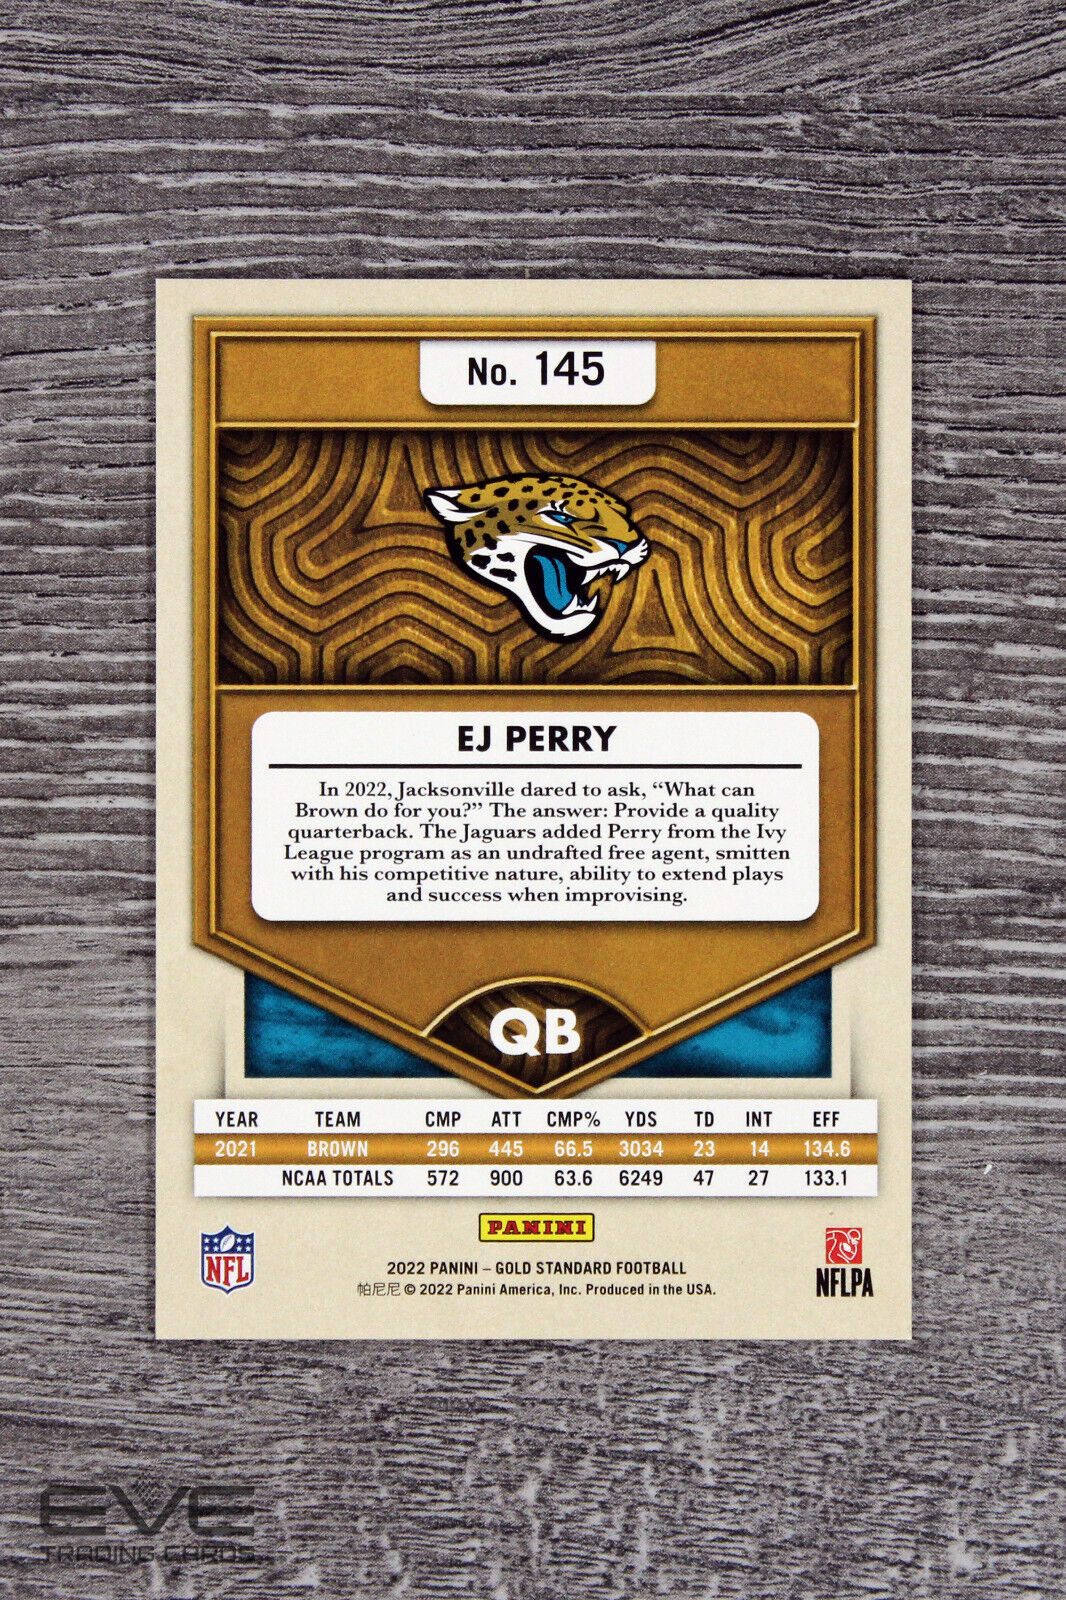 2022 Panini Gold Standard NFL Card #145 EJ Perry Jaguars Rookie Card /25 - NM/M